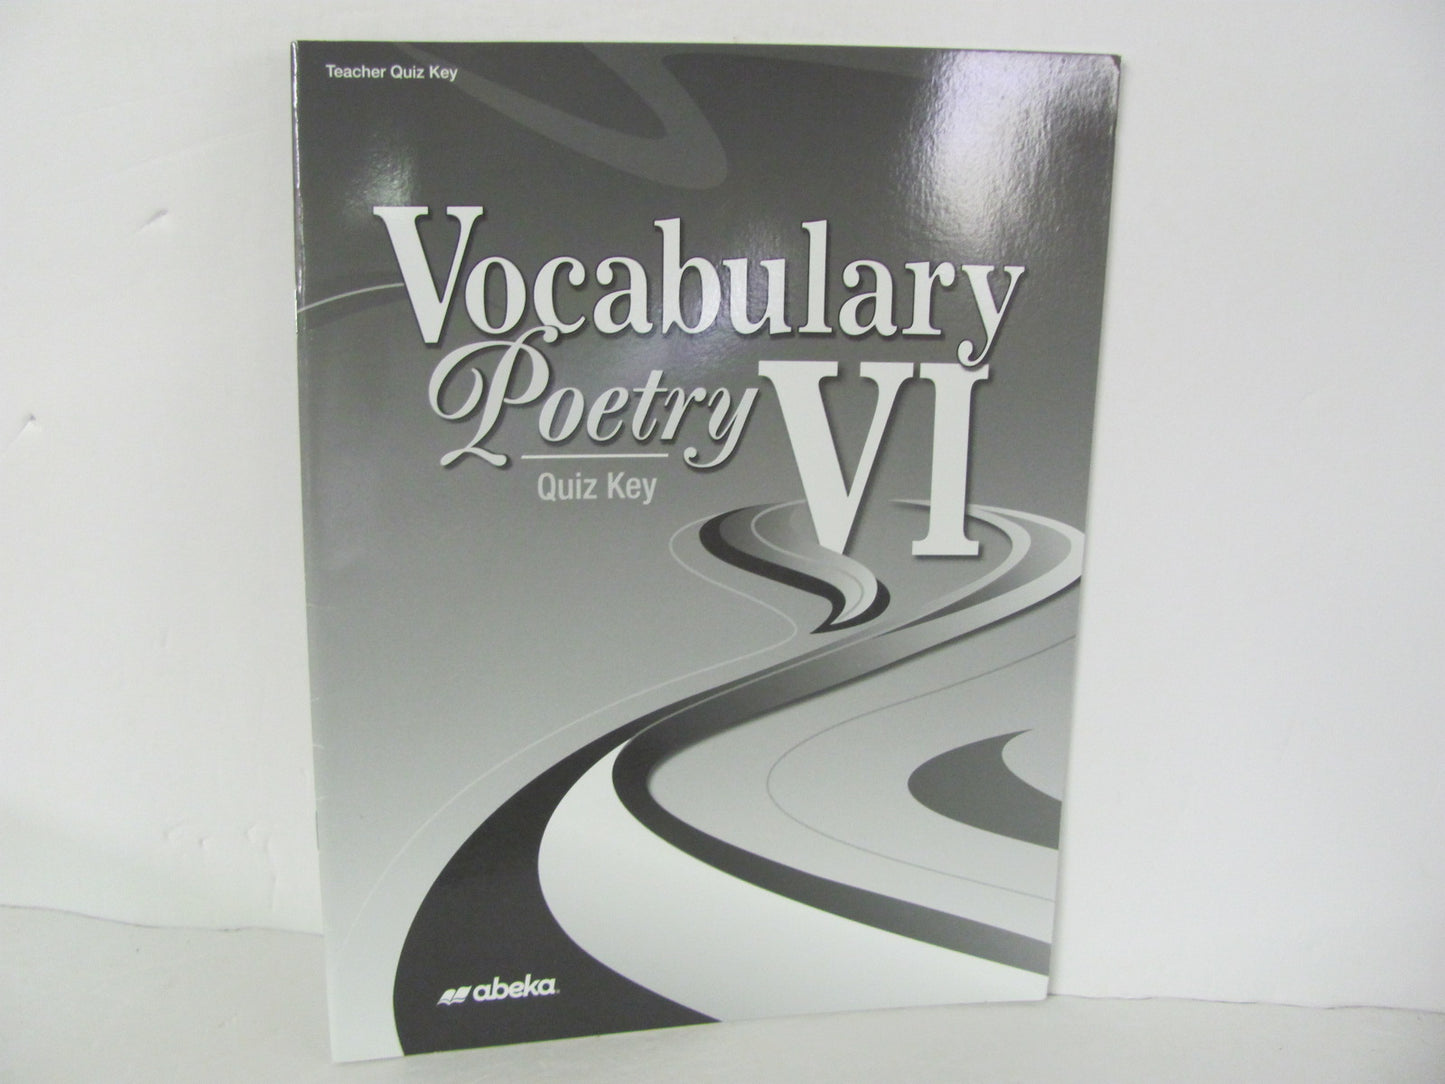 Vocabulary Poetry VI Abeka Quiz Key Pre-Owned Spelling/Vocabulary Books